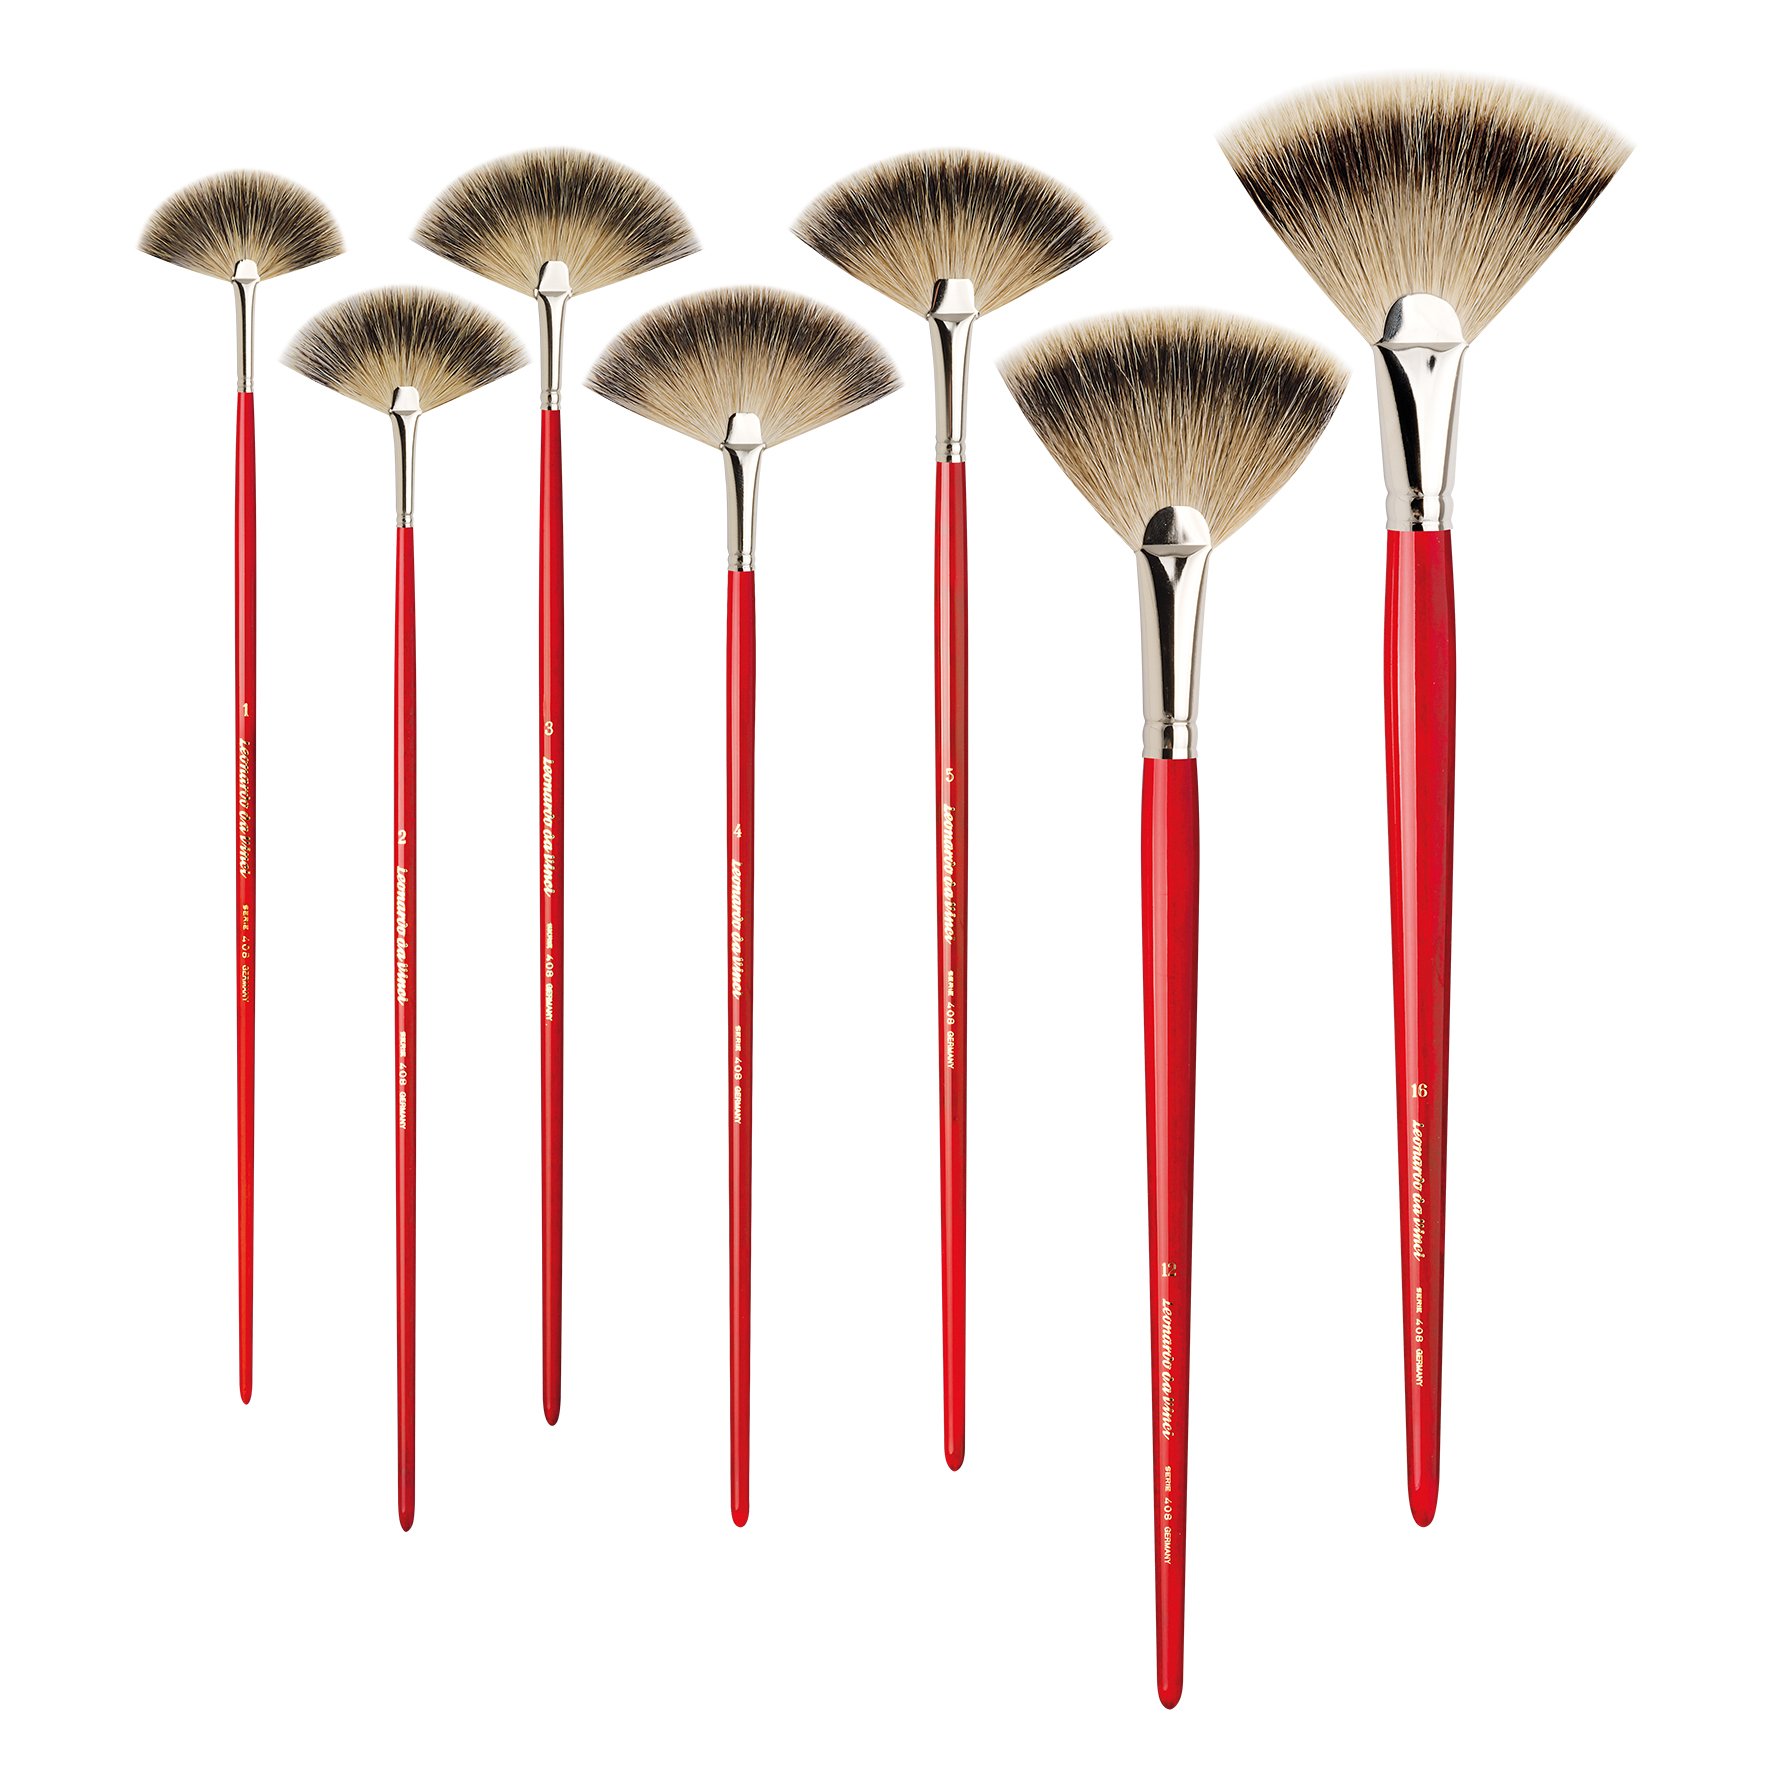 DaVinci Badger Fan Brushes Series 40 - Size 16